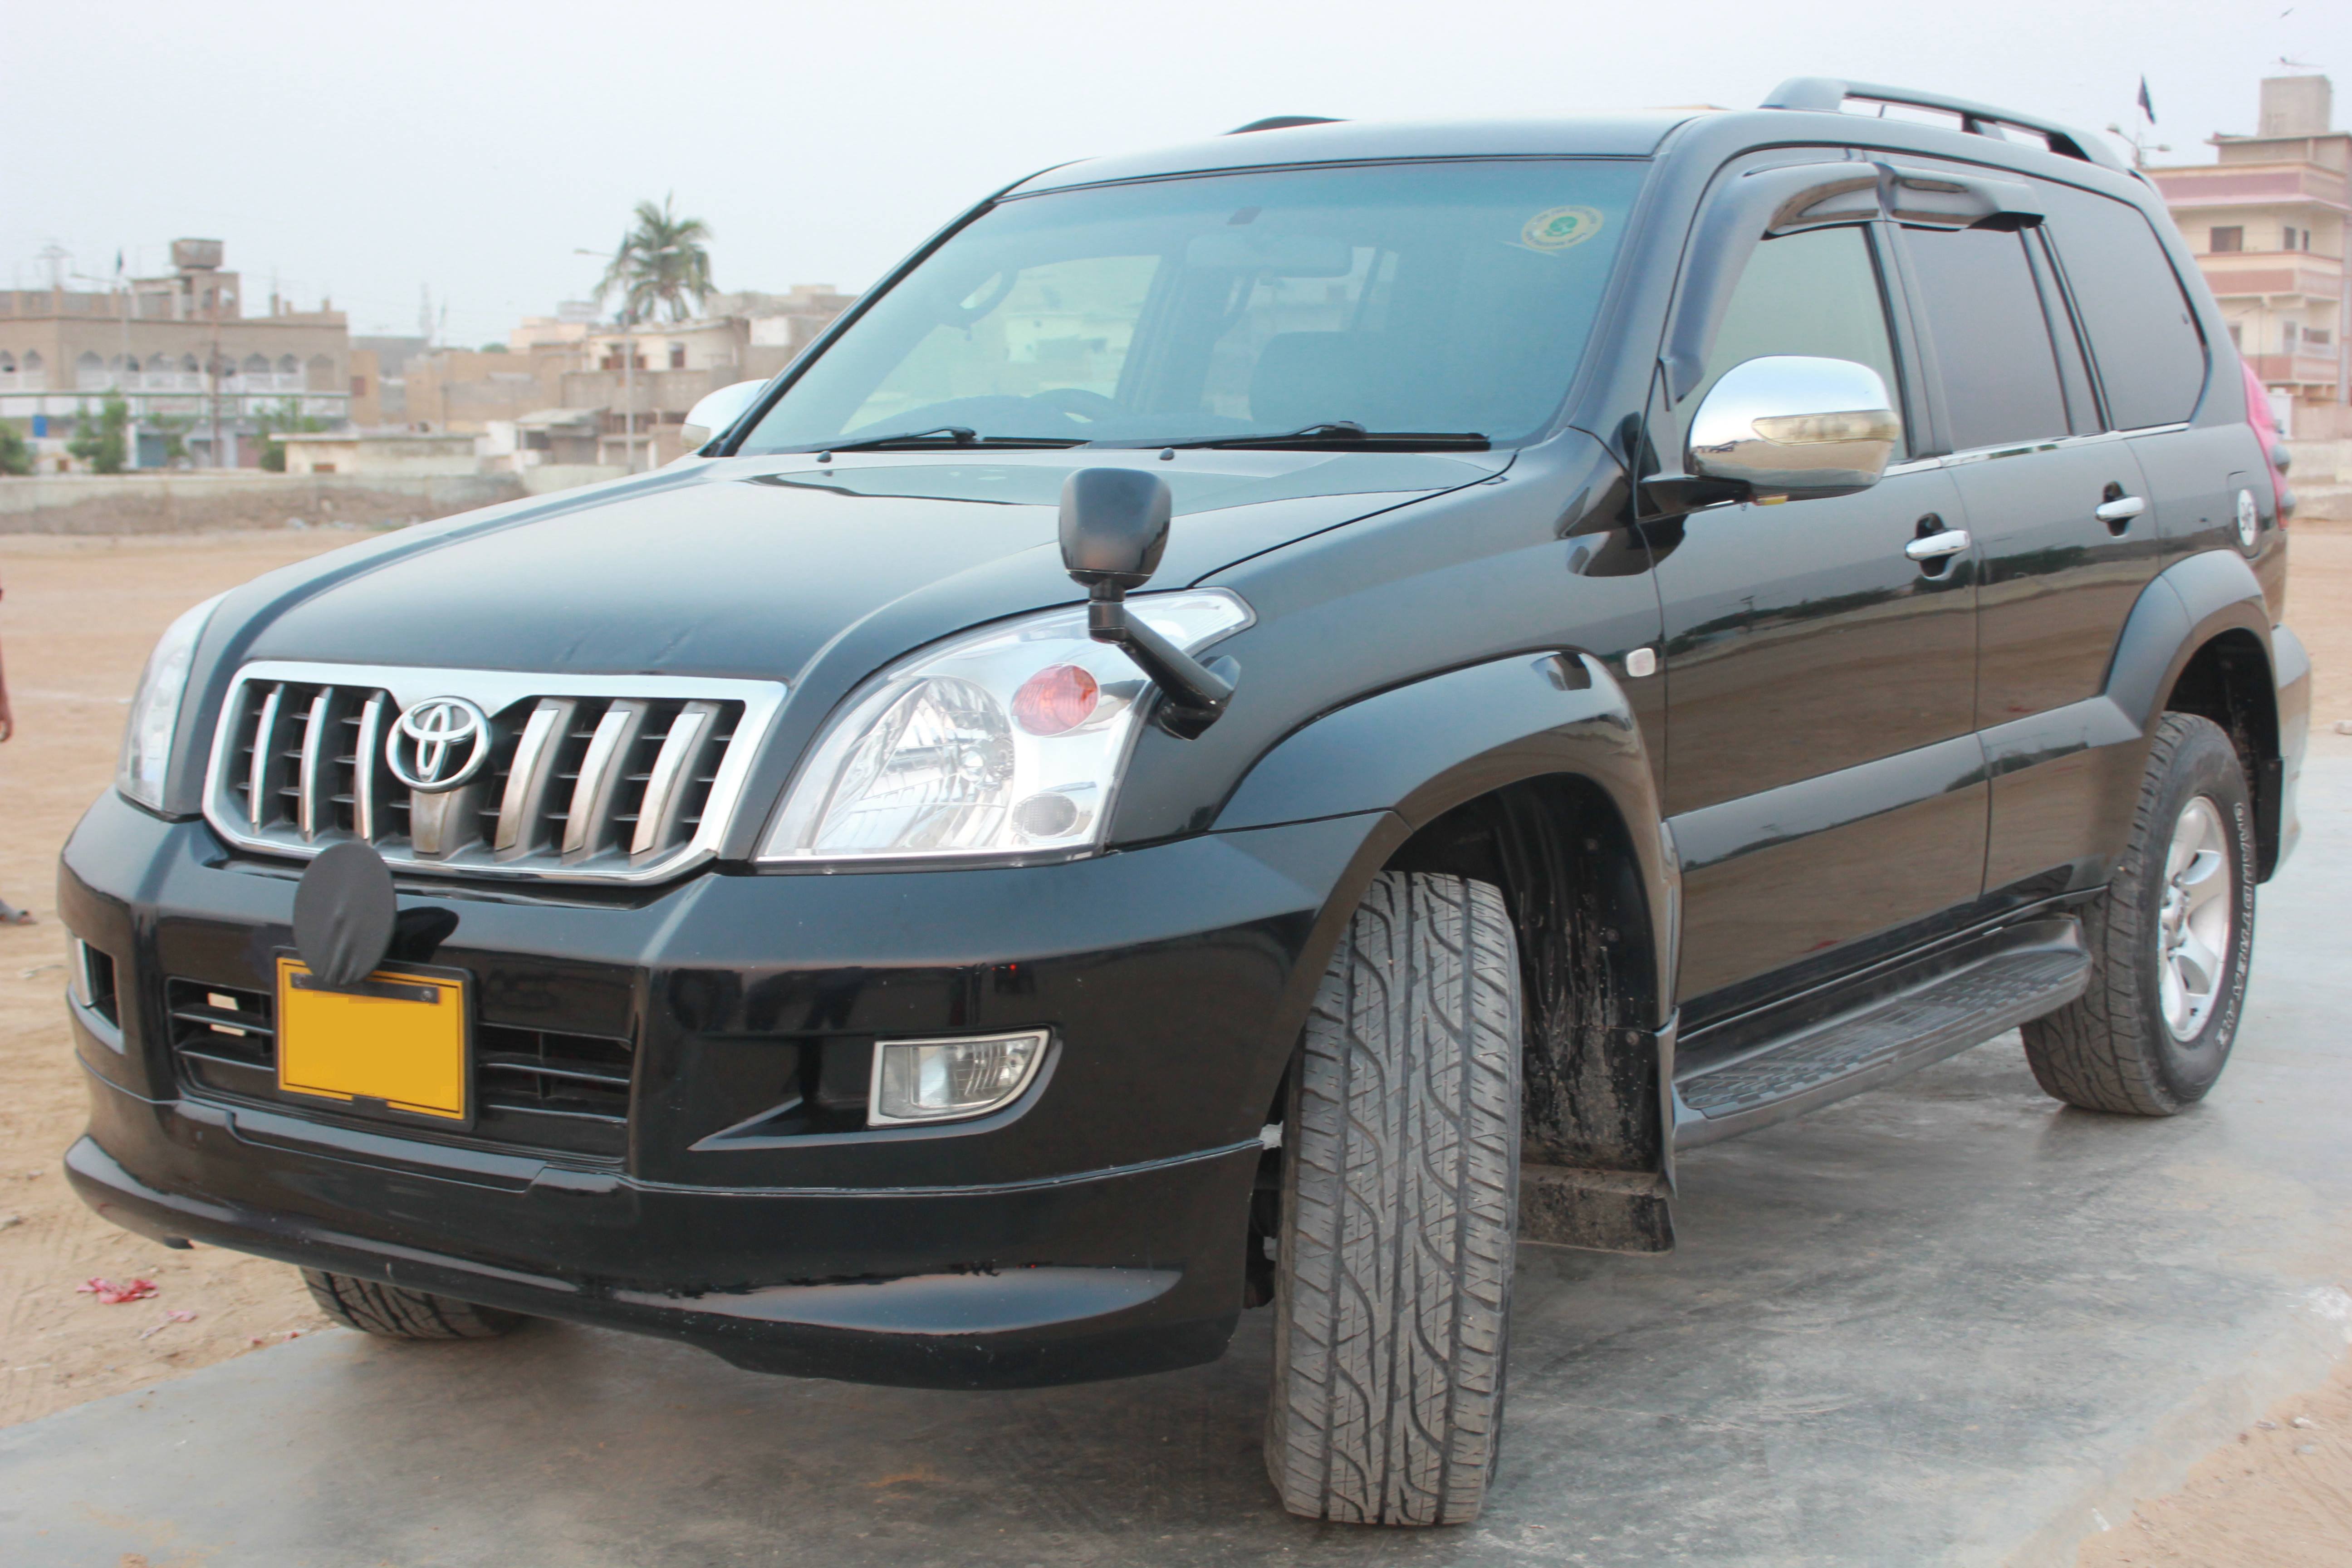 Rent a car service in clifton karachi